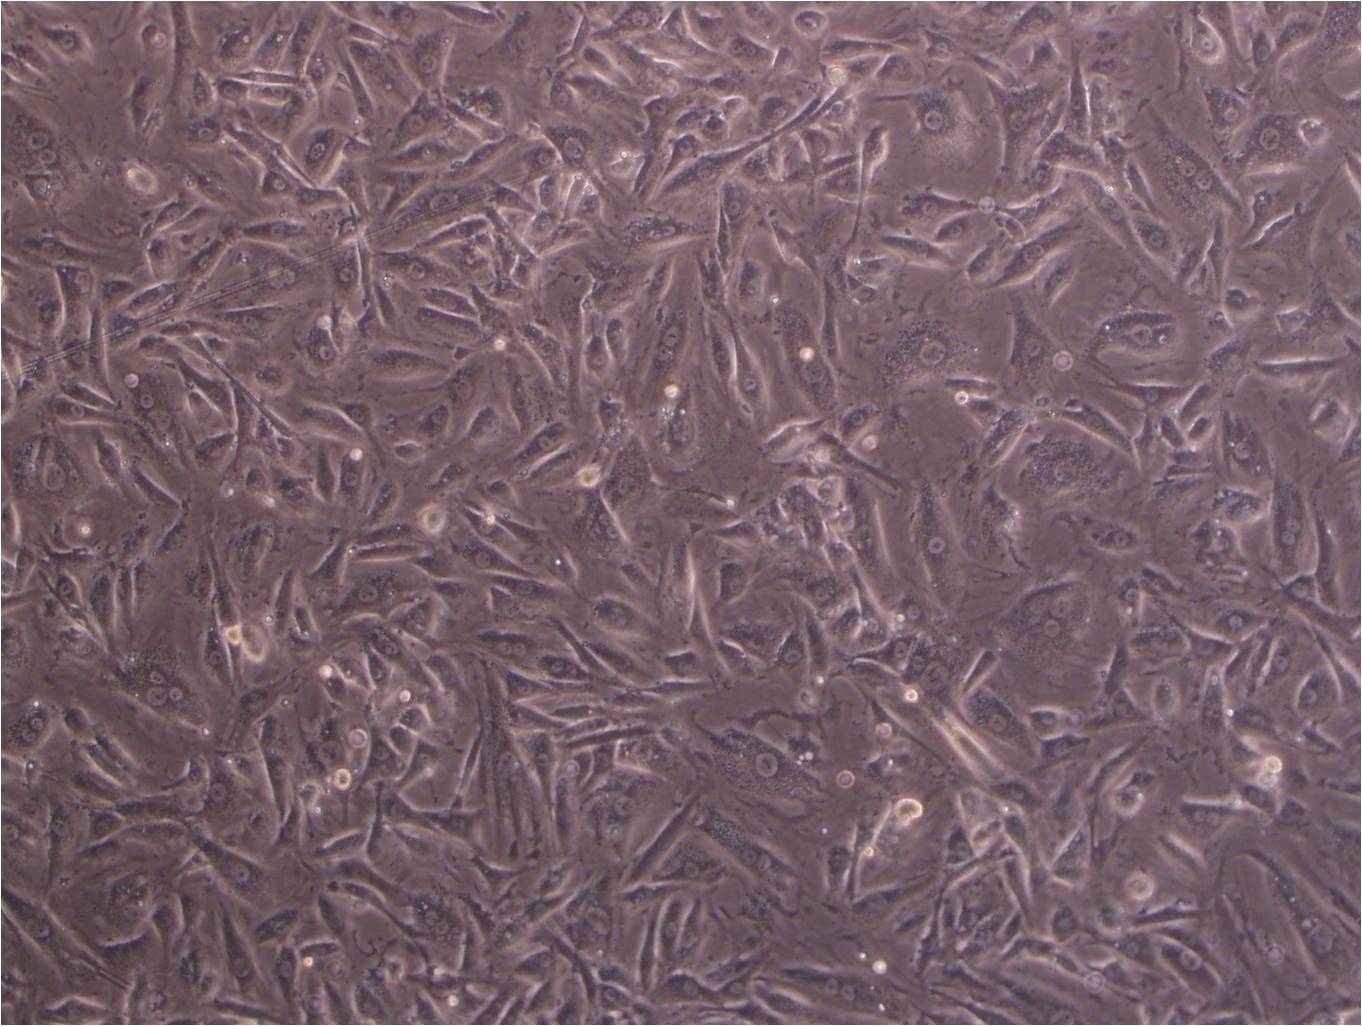 PC-14 epithelioid cells人肺腺癌细胞系